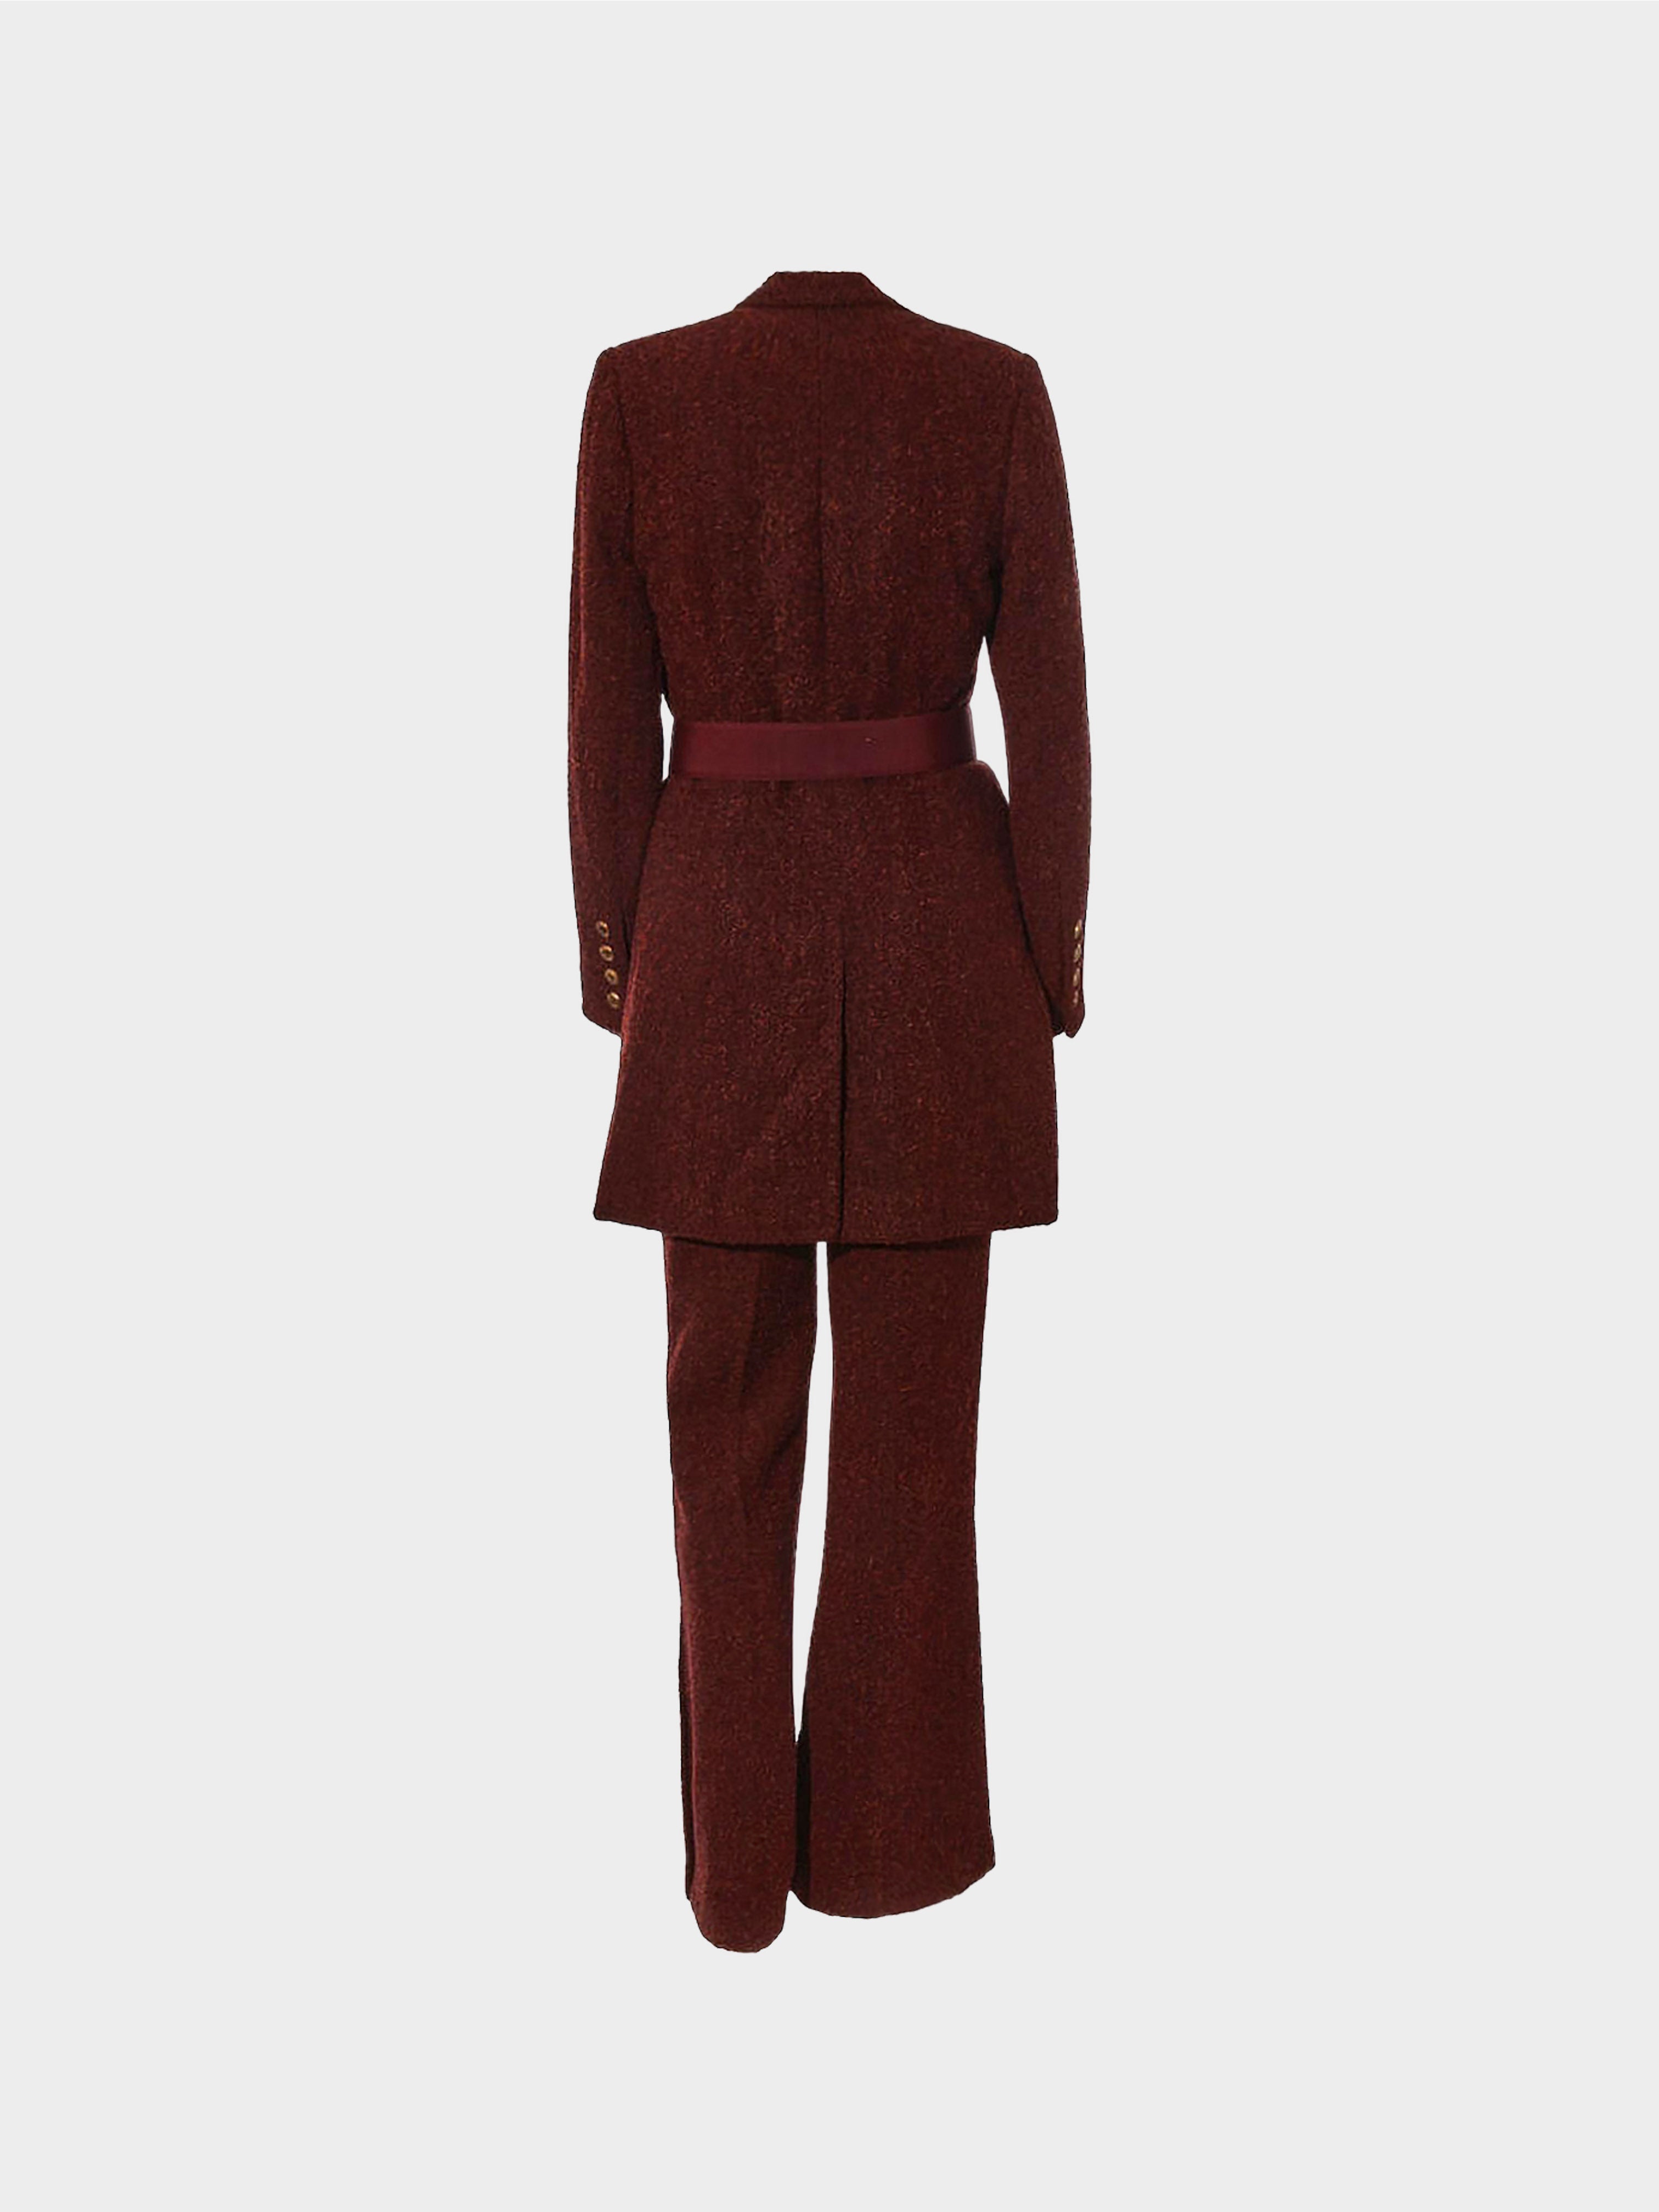 Chanel Couture FW 2001-2002 Rust Brown Bouclé Wool Suit Set